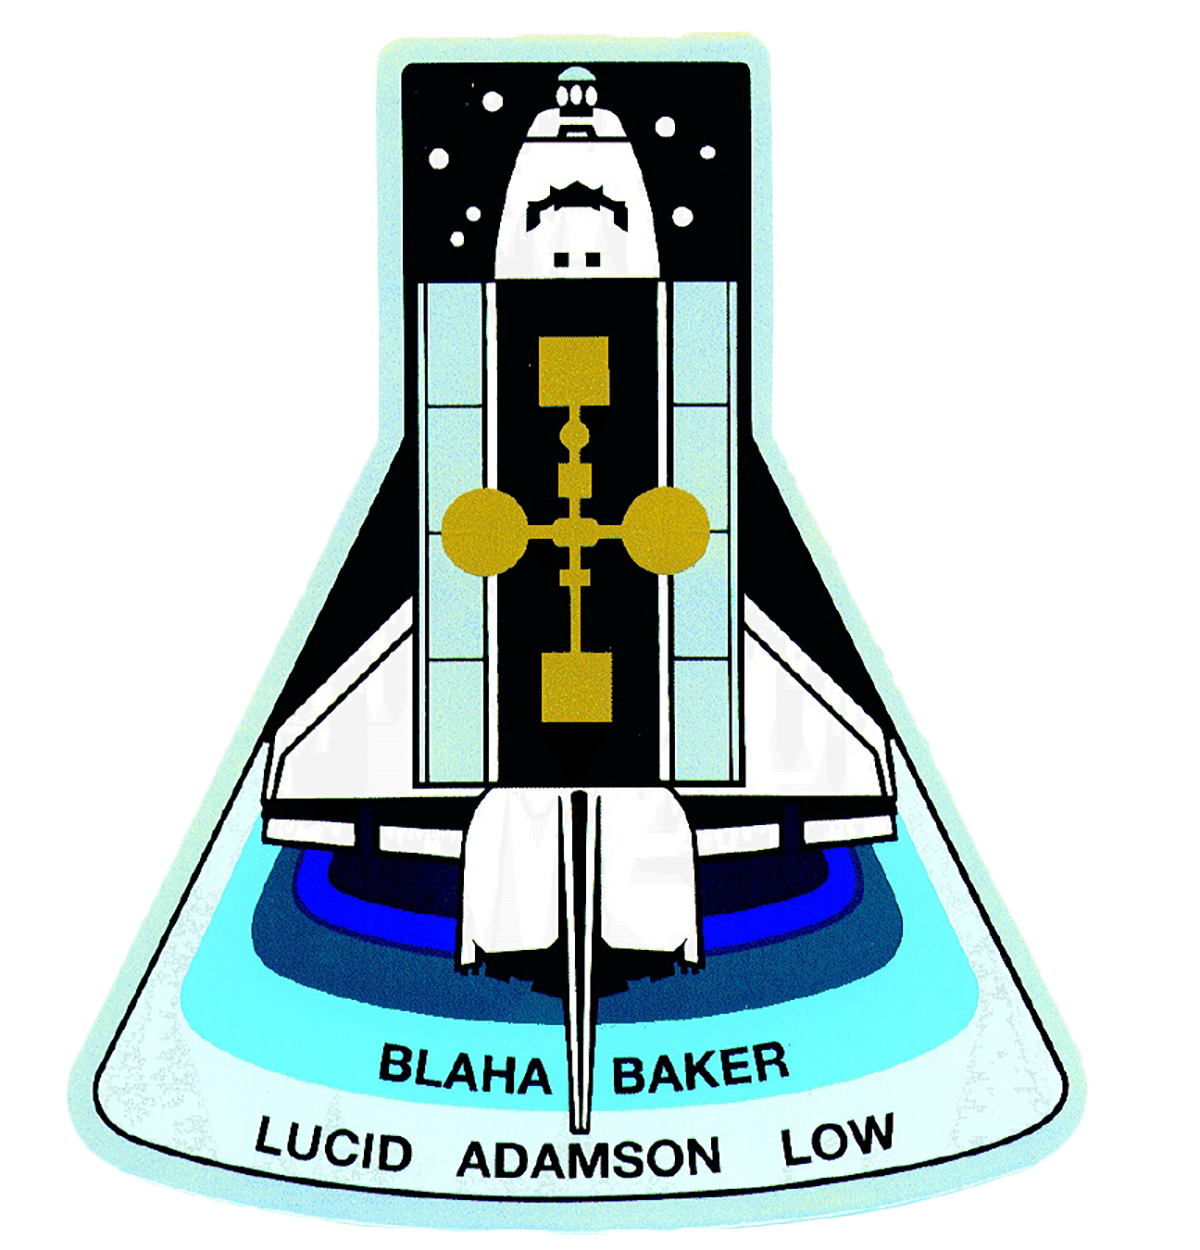 STS-43 (Atlantis)